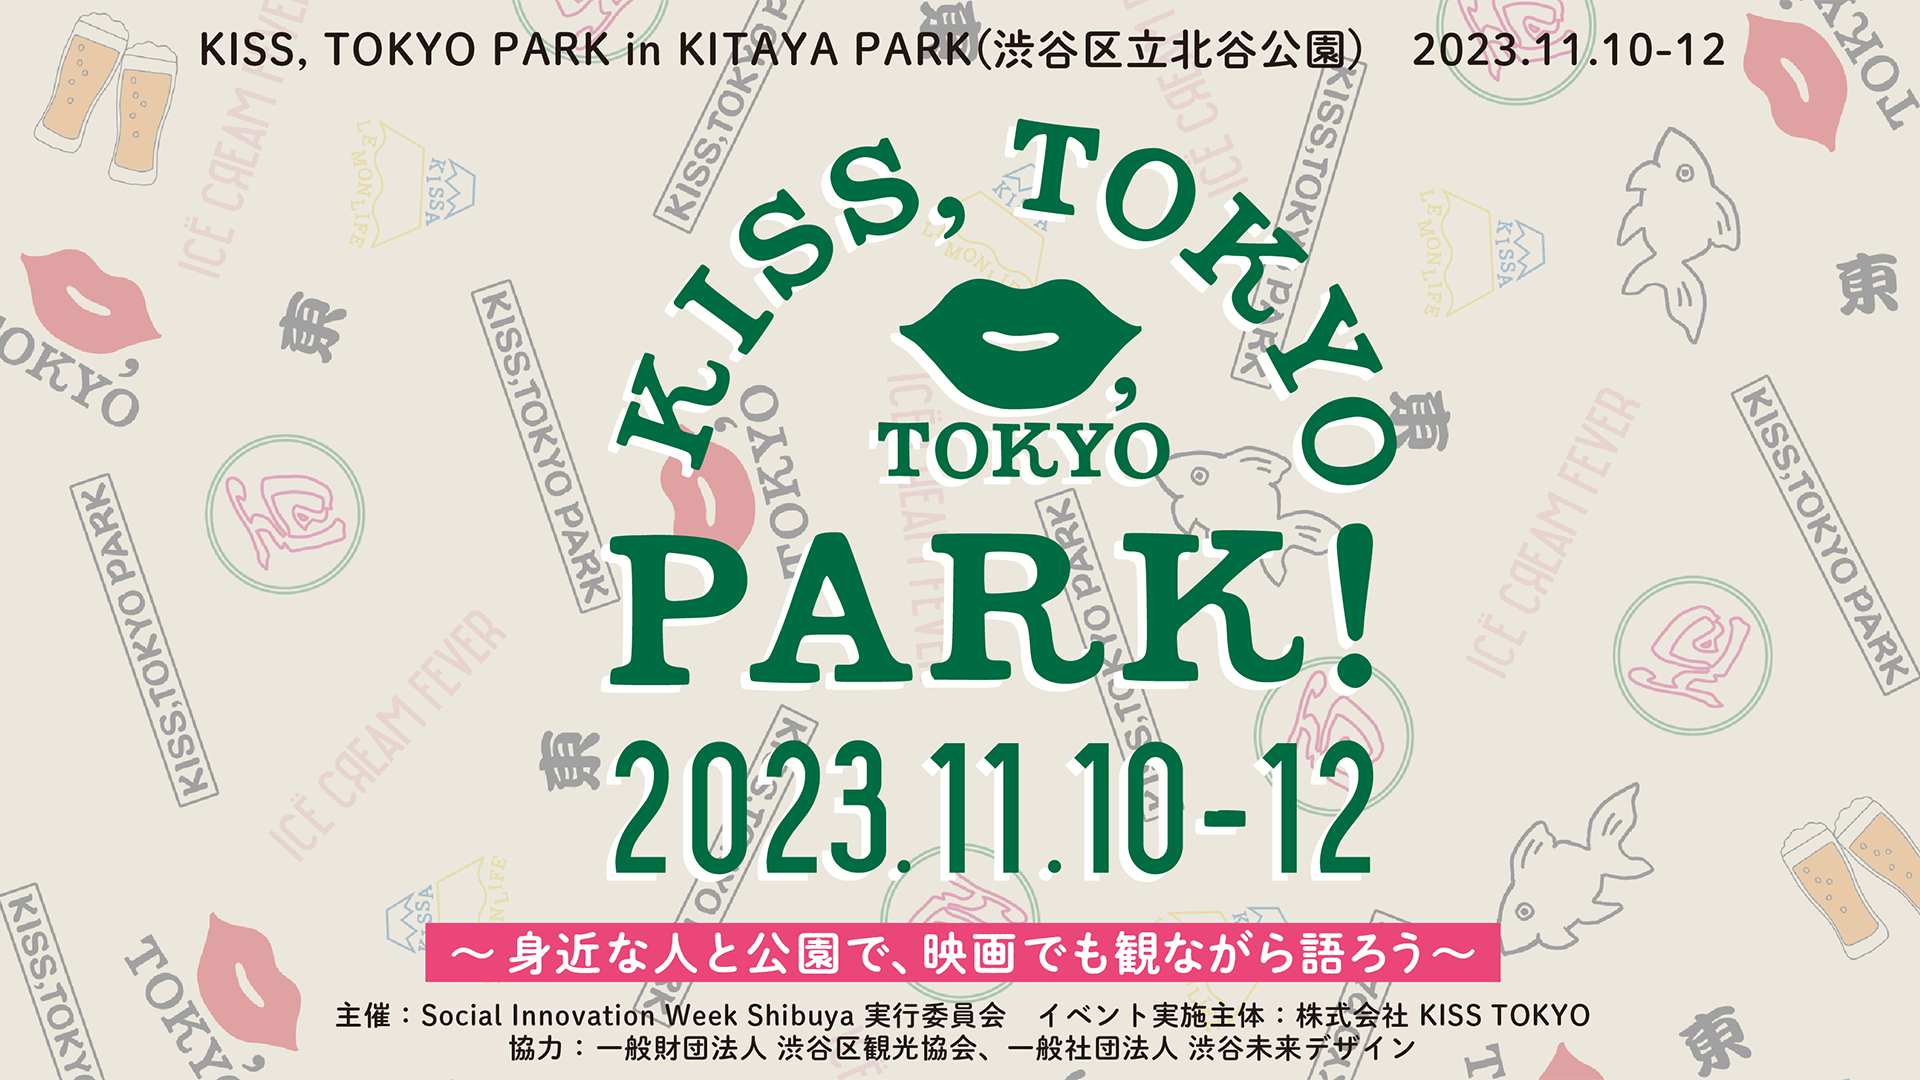 yKISS, TOKYOz11/10()`12()KITAYA PARK(aJ旧kJ)ŁuKISS, TOKYO PARK`g߂ȐlƌŁAfłςȂ낤`vJÁI